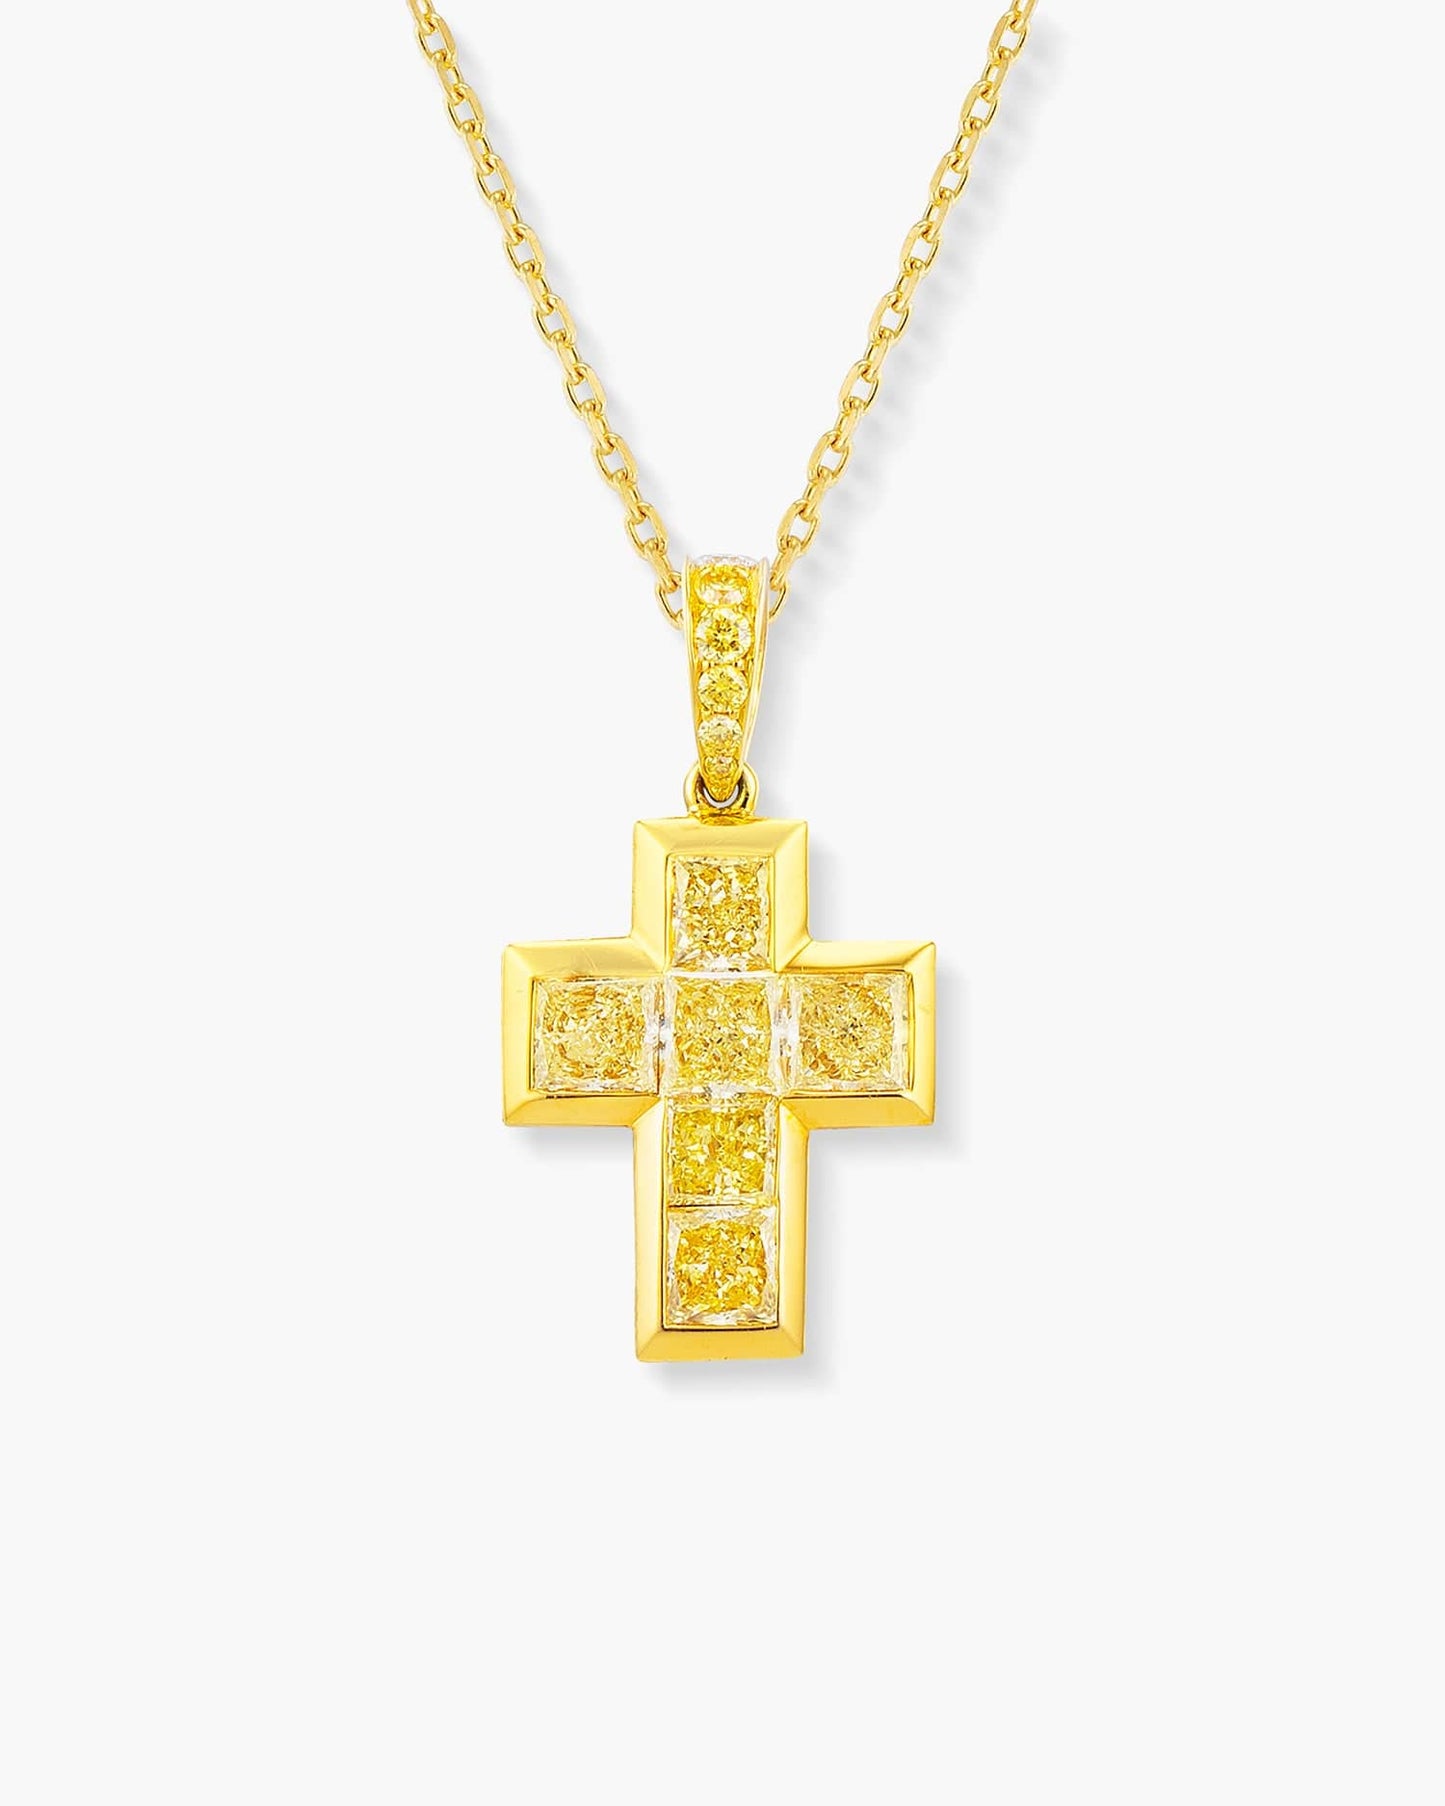 Princess Cut Yellow and White Diamond Cross Pendant Necklace, 1.77 carats